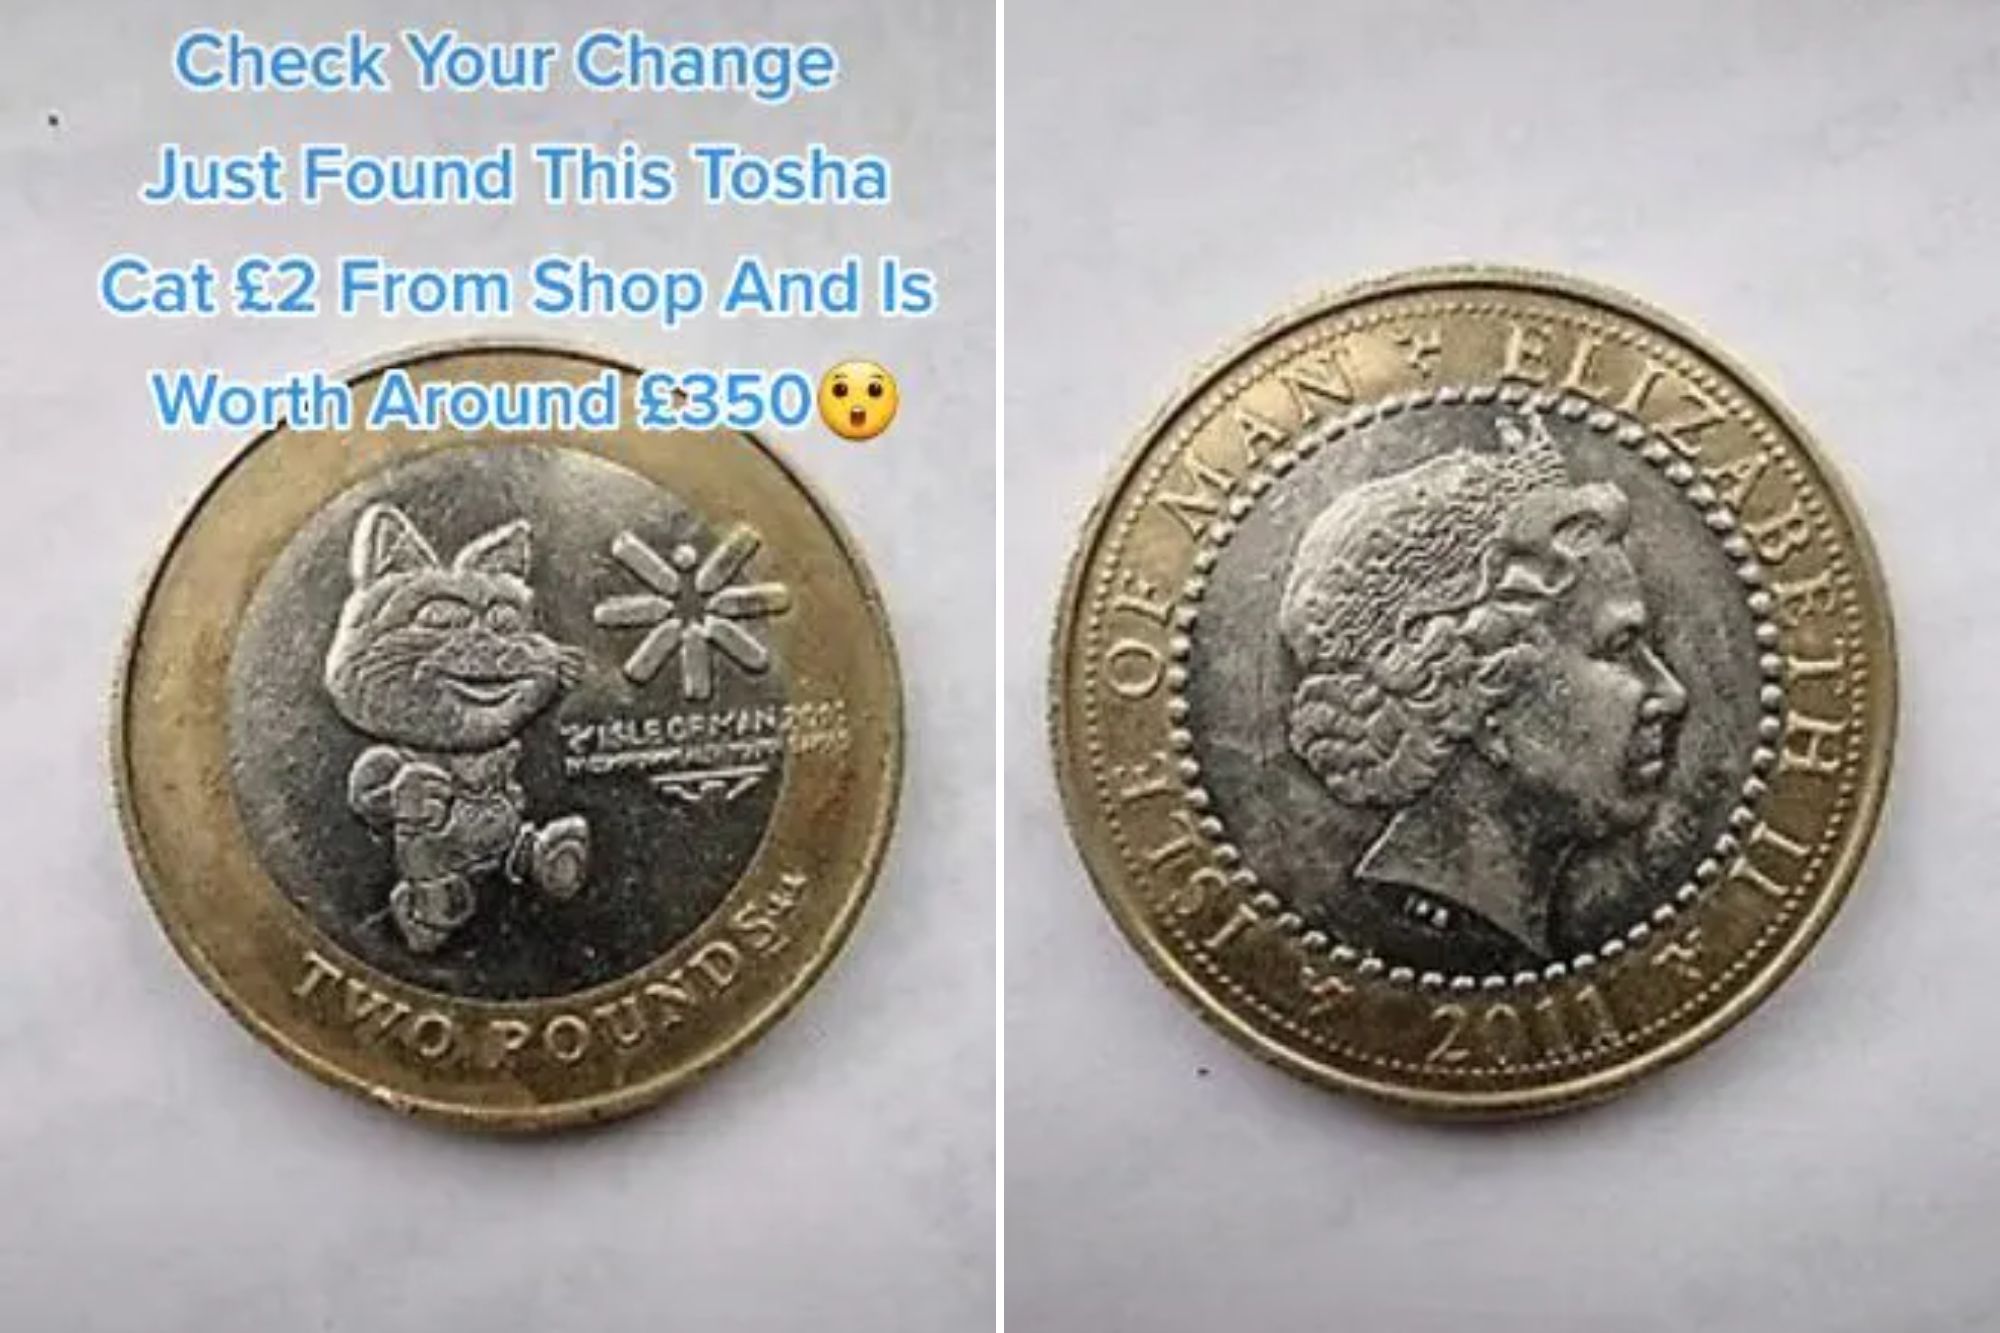 43 £2 (2 Pound Coins) ideas | coins, british coins, coin design